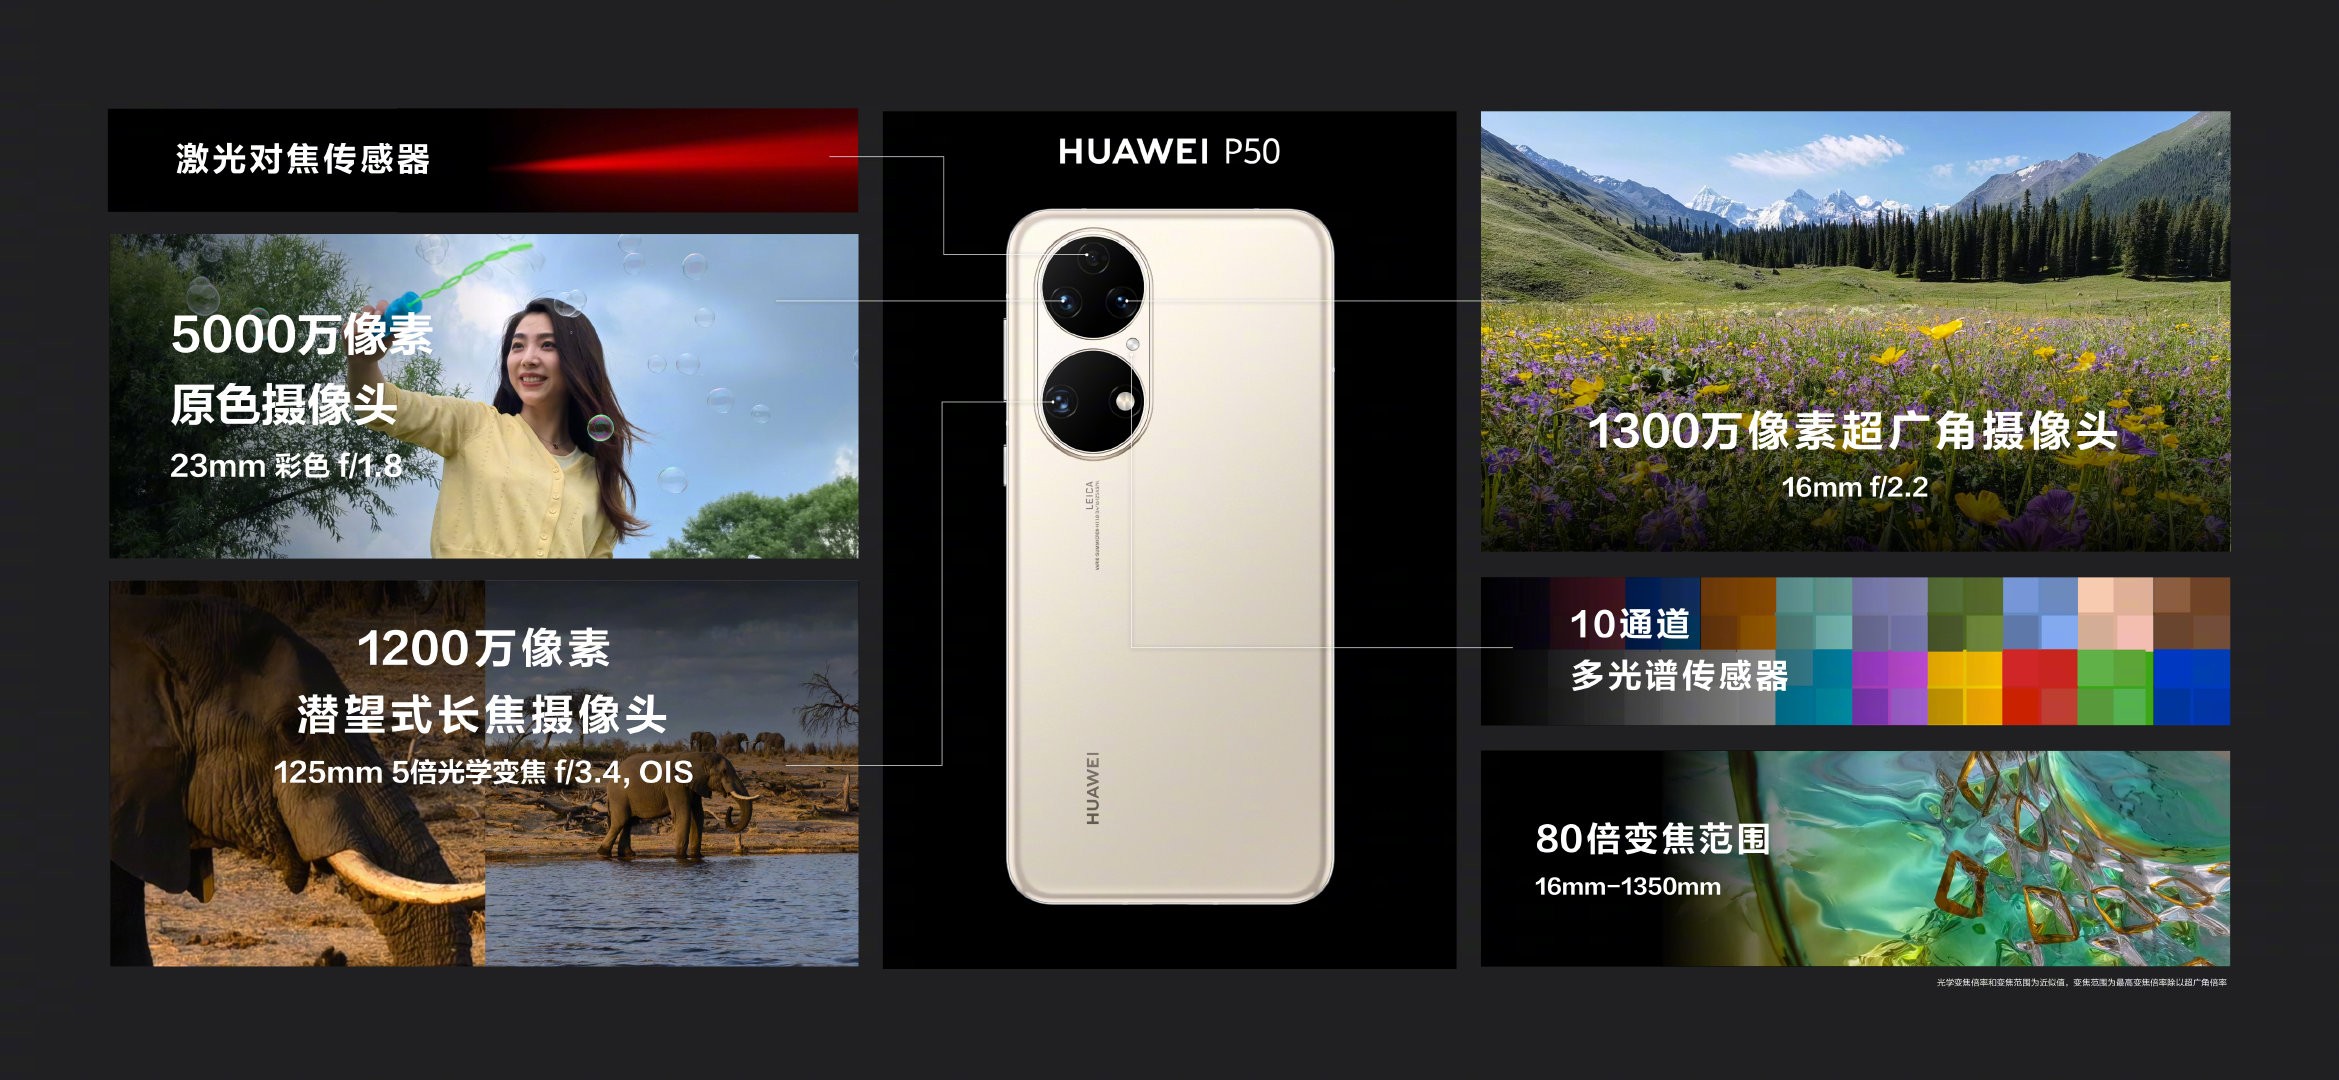 gsmarena 002 15 | Huawei | เปิดตัว Huawei P50 กล้องเทพ แยกชิป Snapdragon และ Kirin